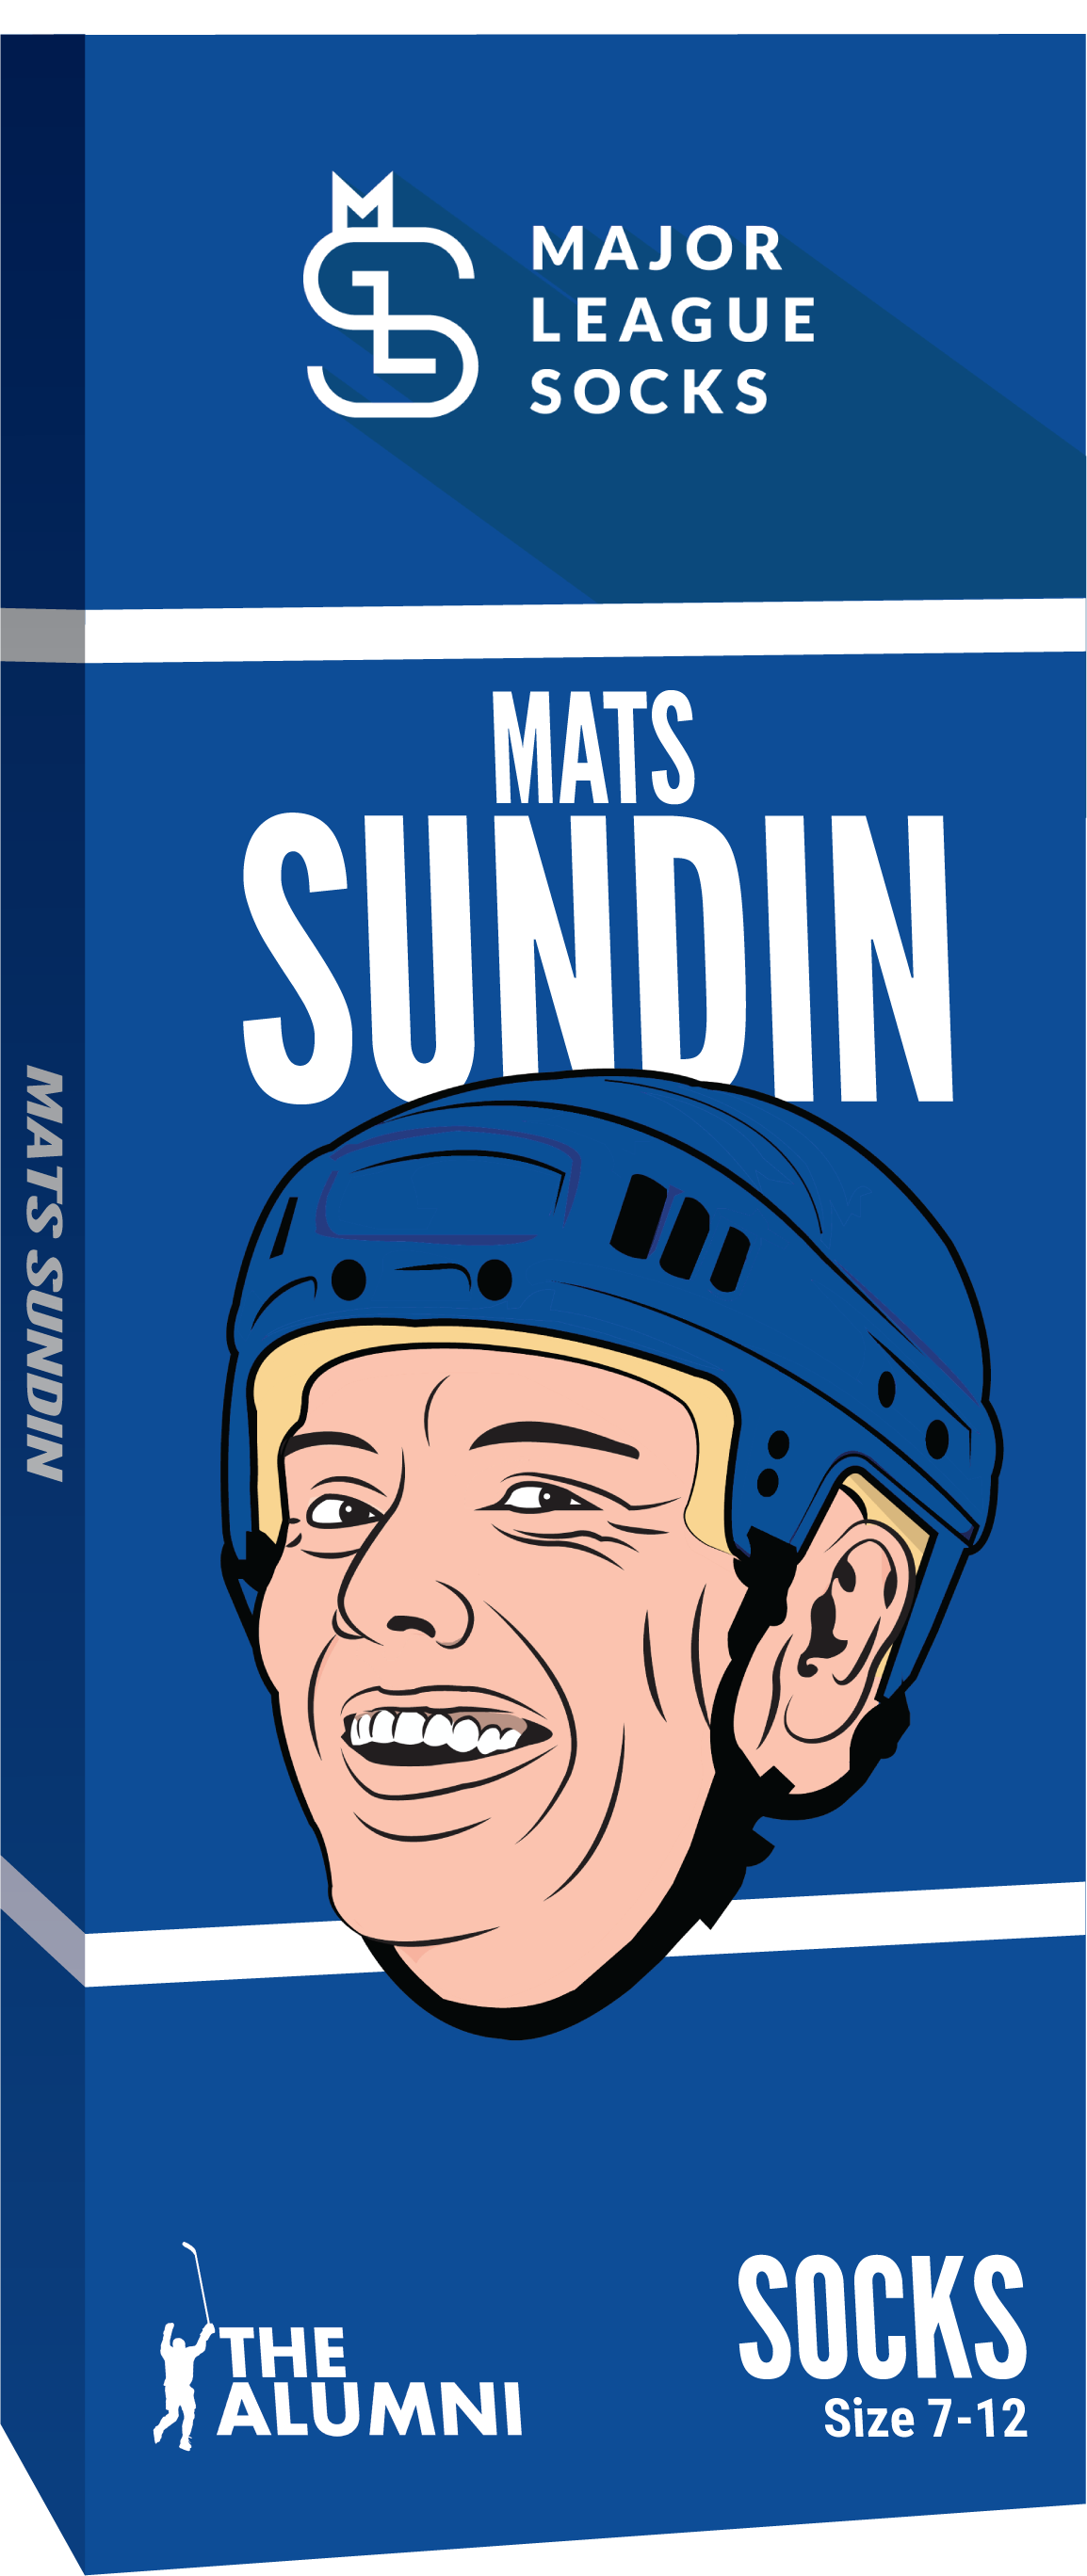 Maple Leafs Major League Socks Men's Sundin Socks